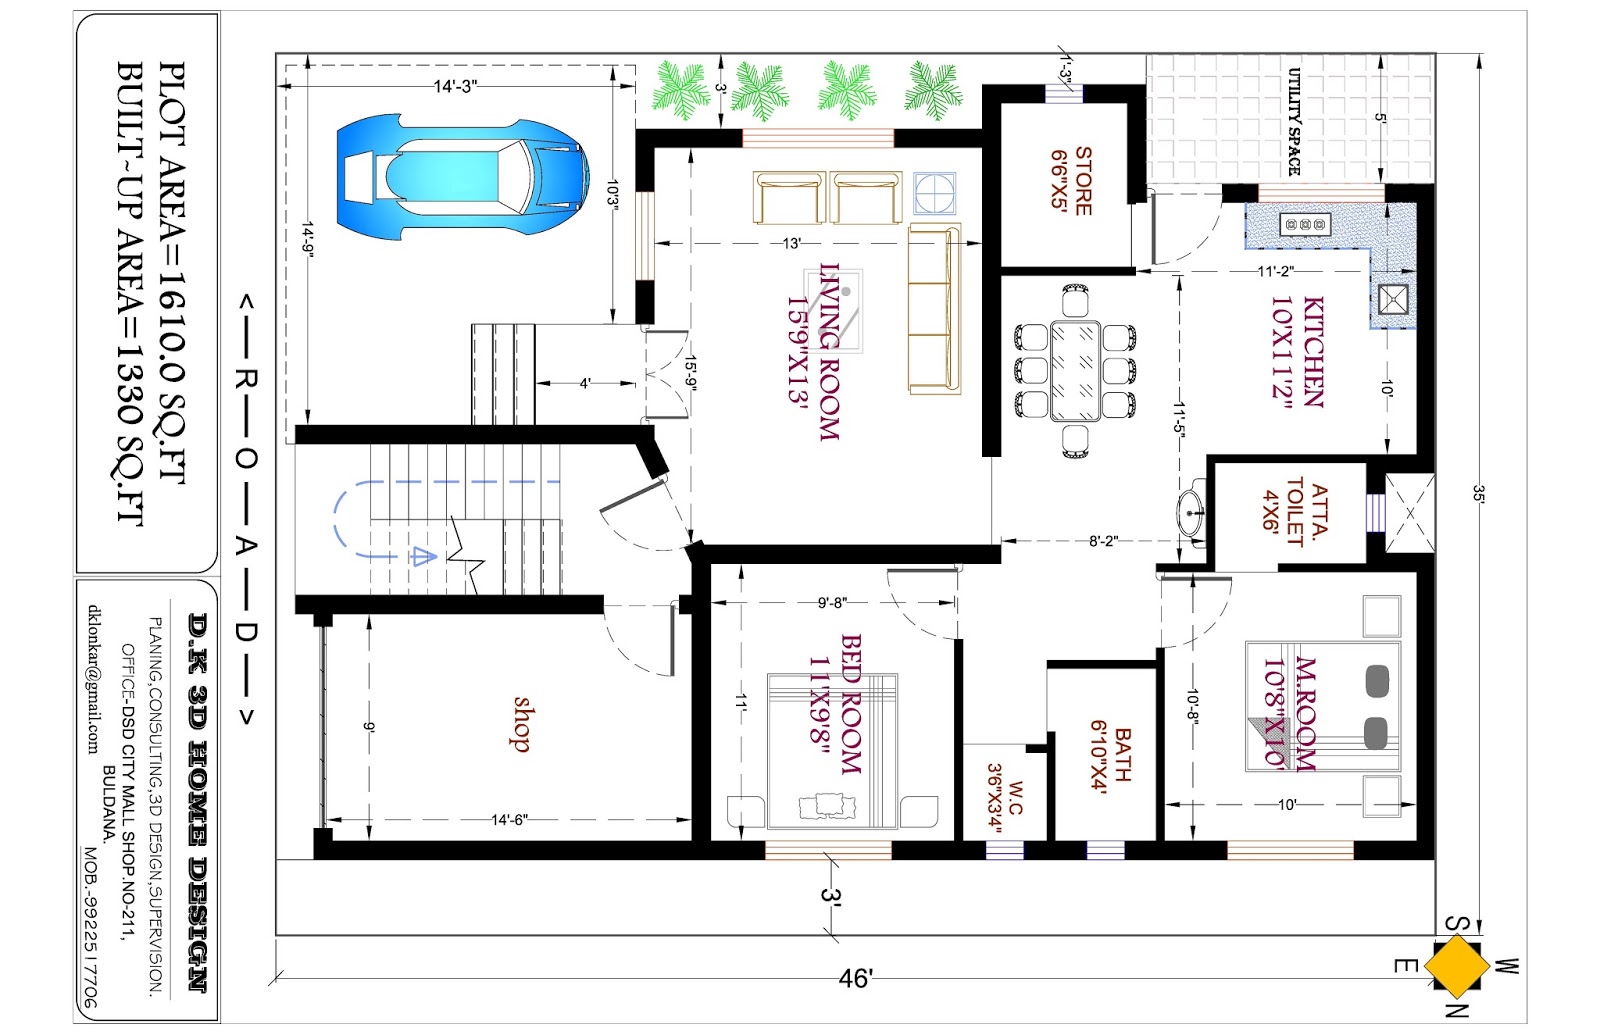 35'x46' feet house plan